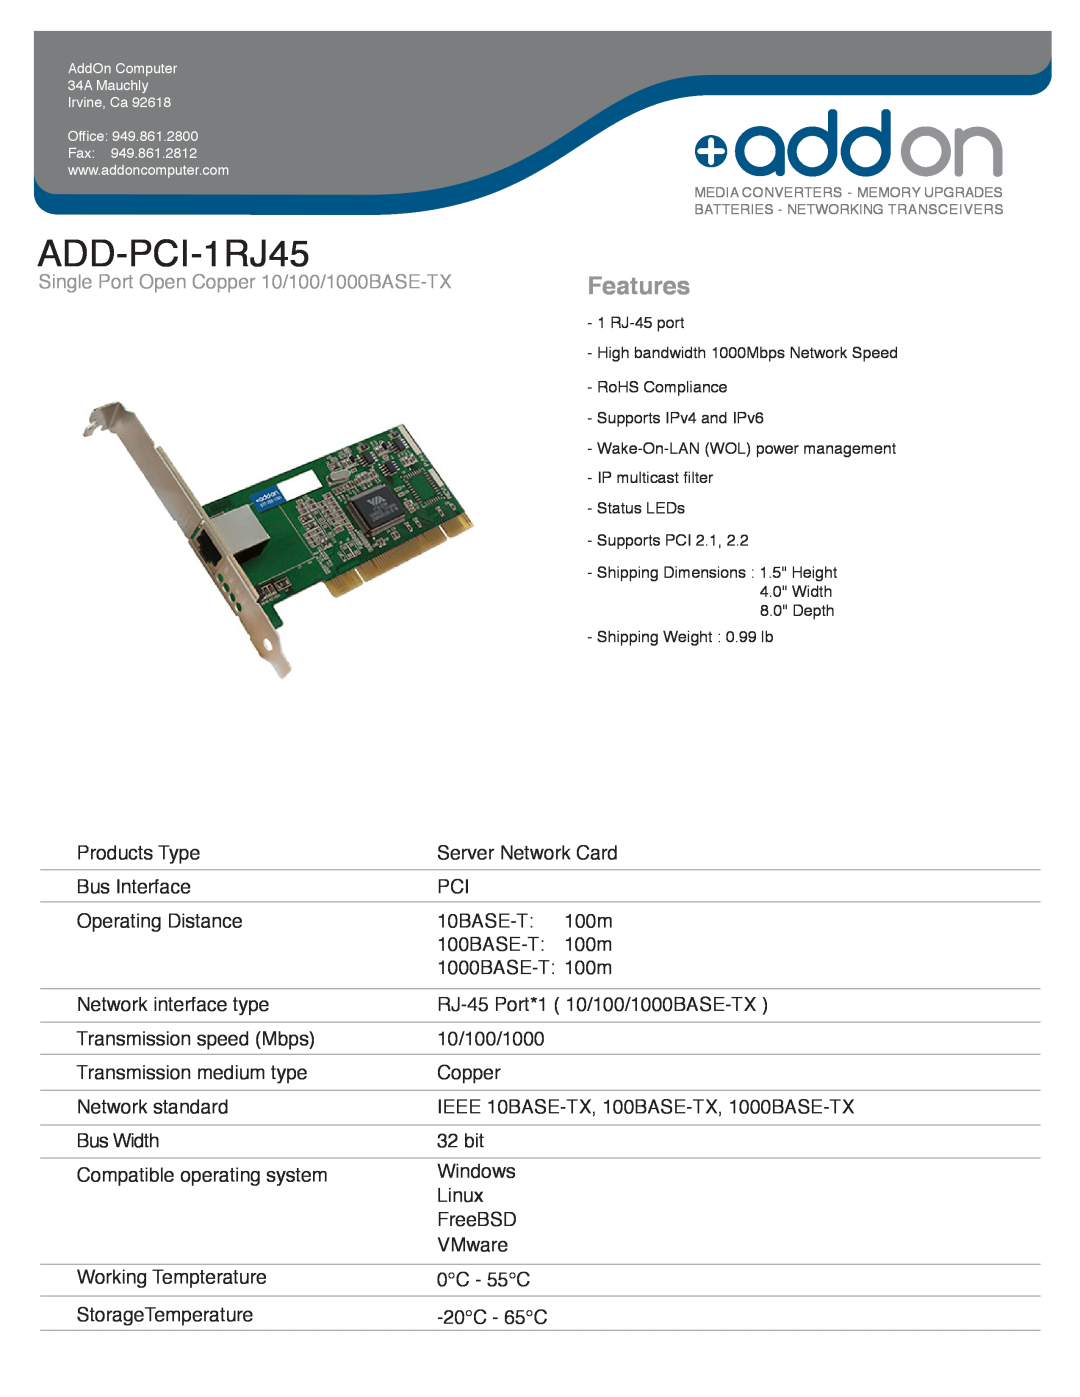 Addon ADDPCI1RJ45 dimensions ADD-PCI-1RJ45, Features, Single Port Open Copper 10/100/1000BASE-TX 